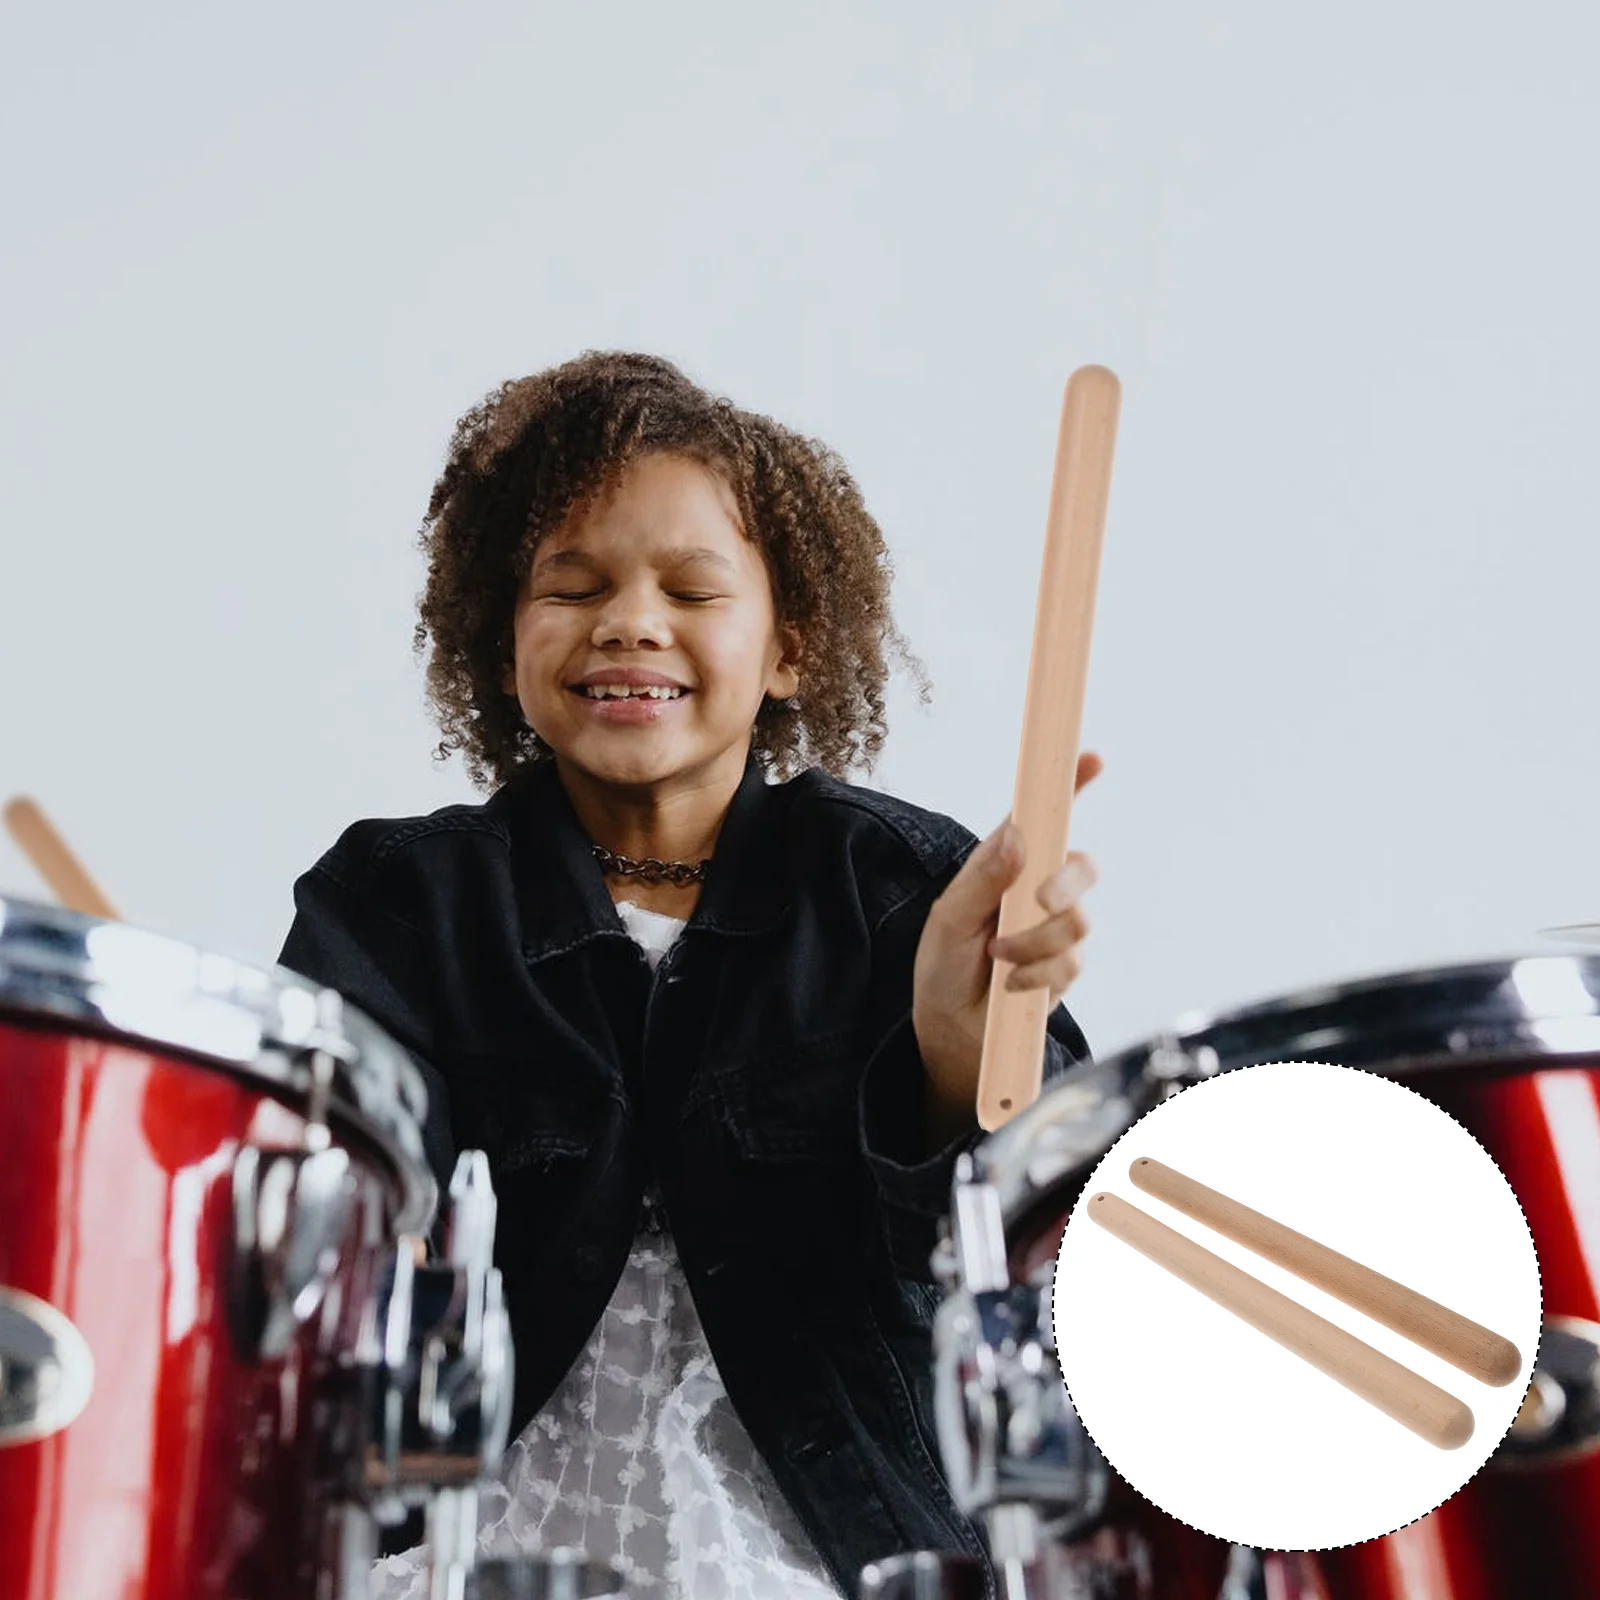 Percussion Wood Sticks Drum Drums Kids Drumsticks Hardwood Rhythm Grip Classical Claves Silent enlarge